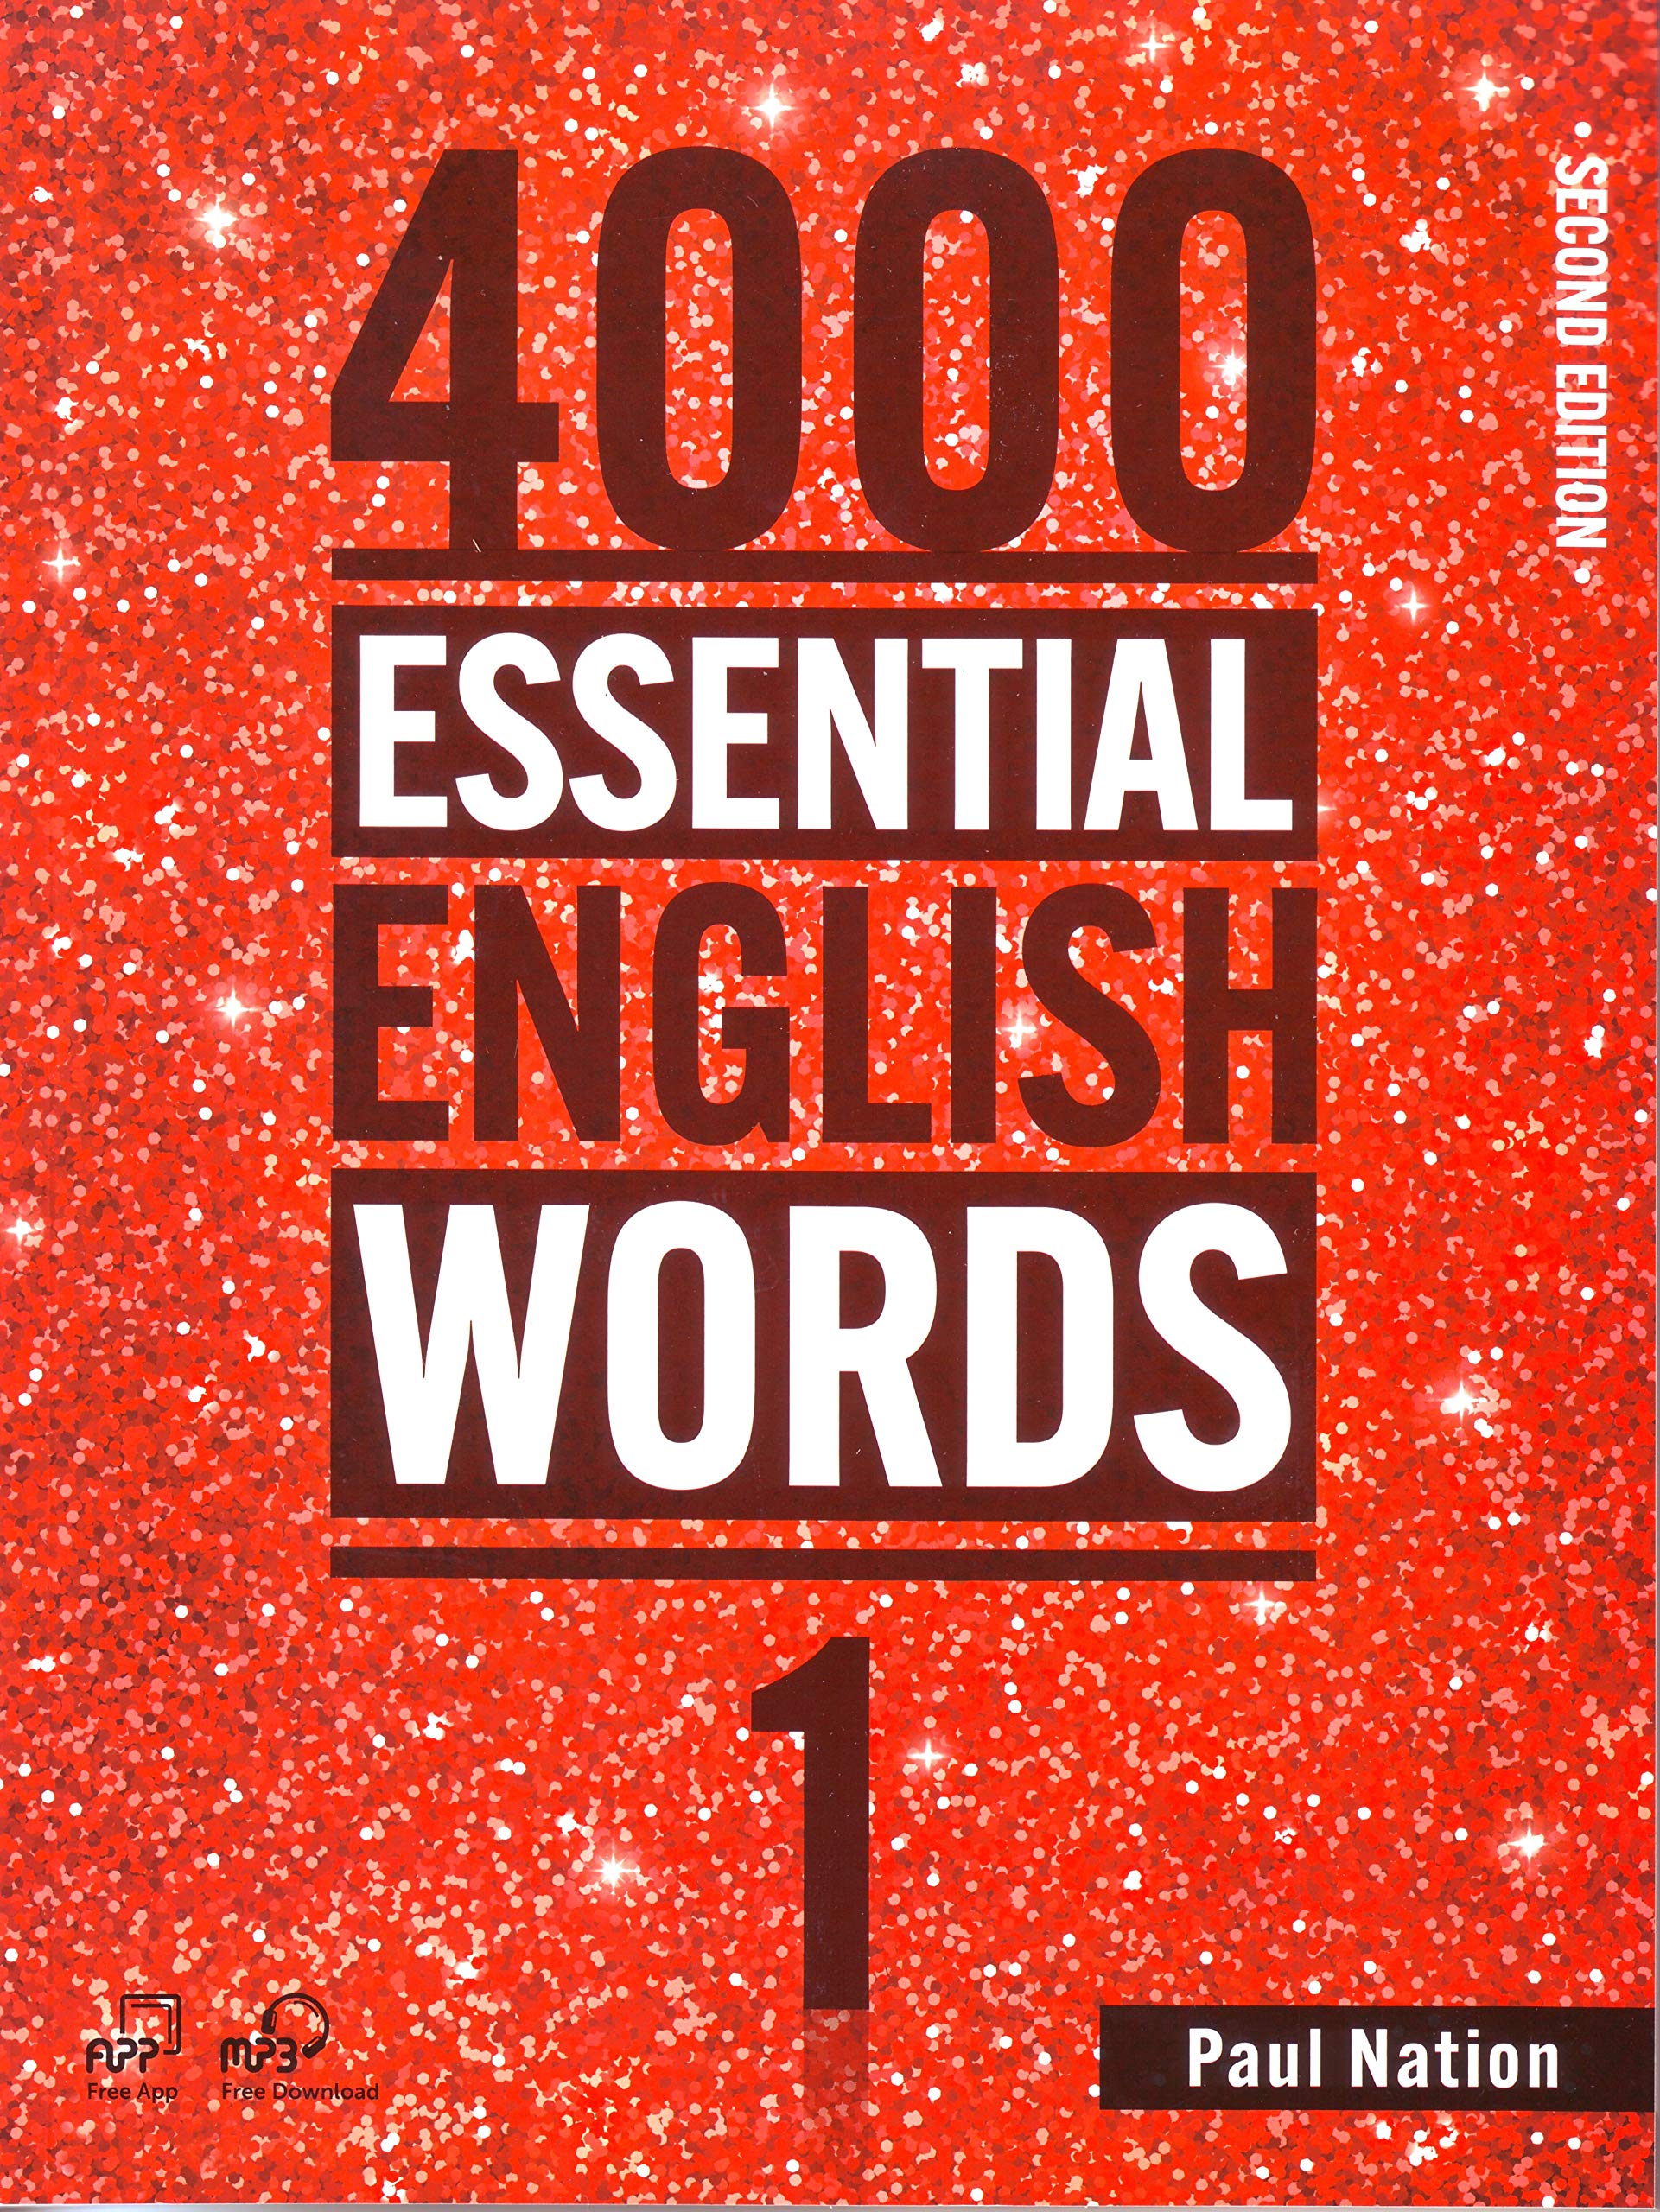 4000-Essential-English-Words-0